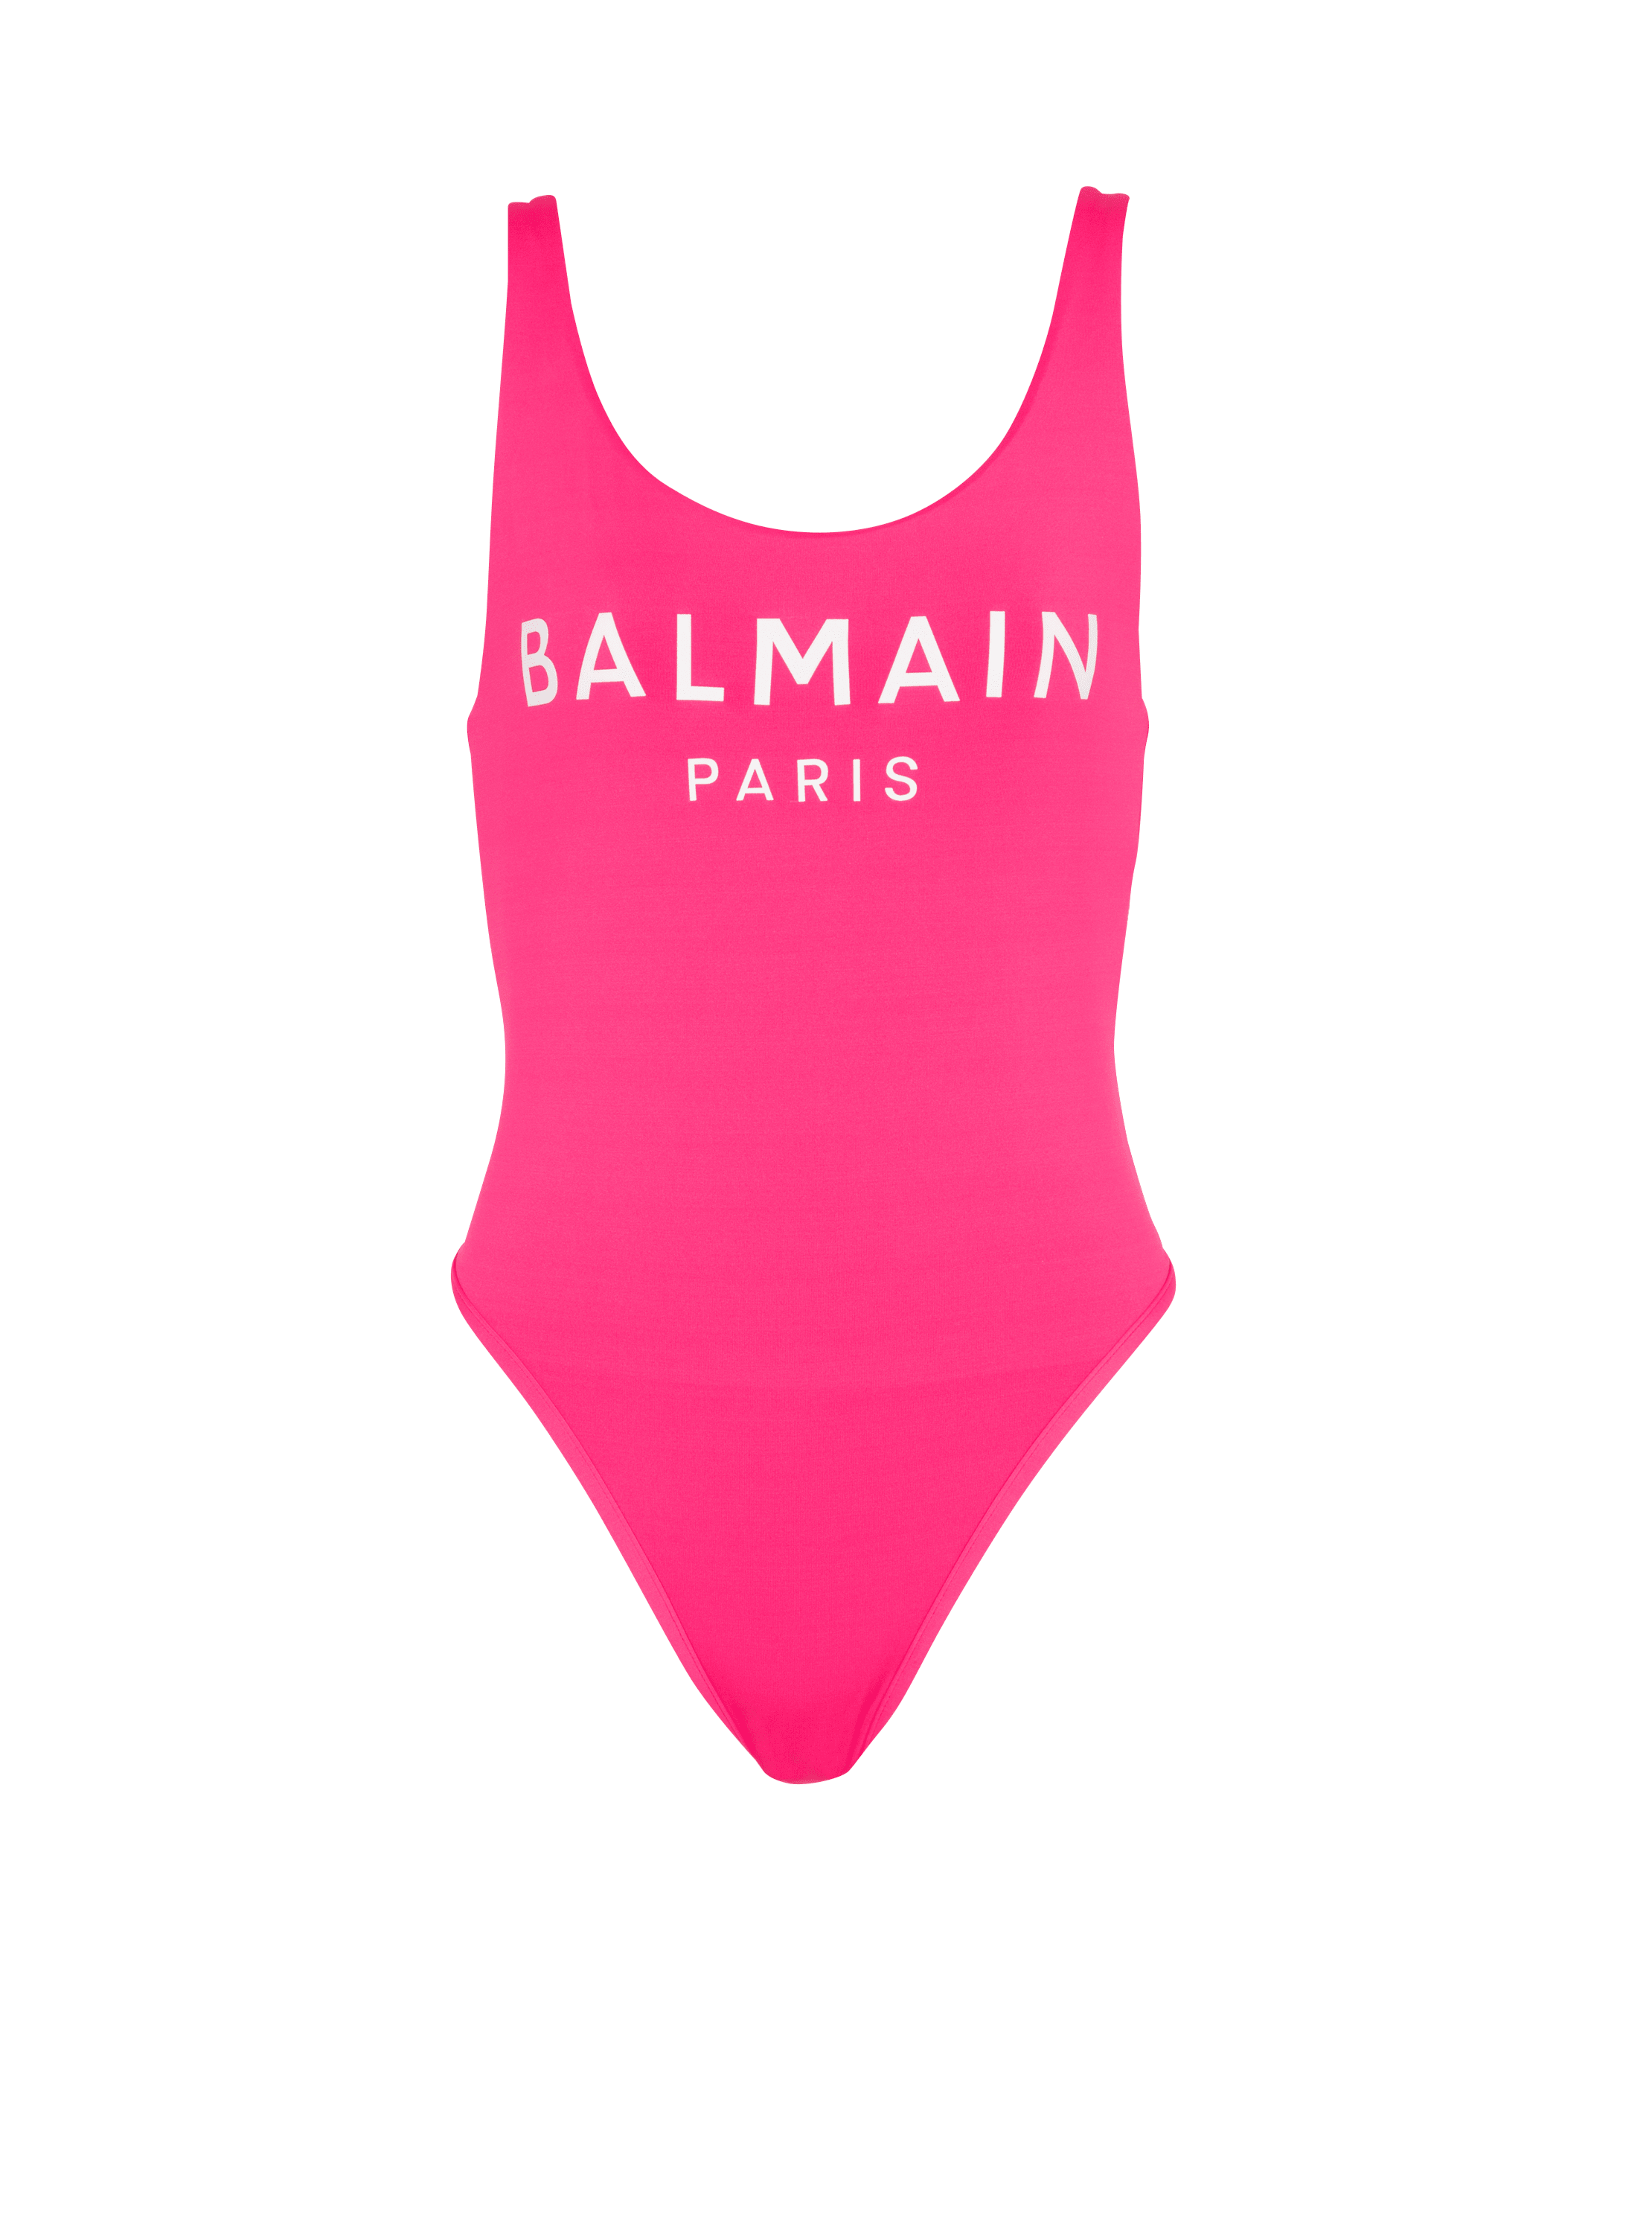 Balmain Paris swimsuit